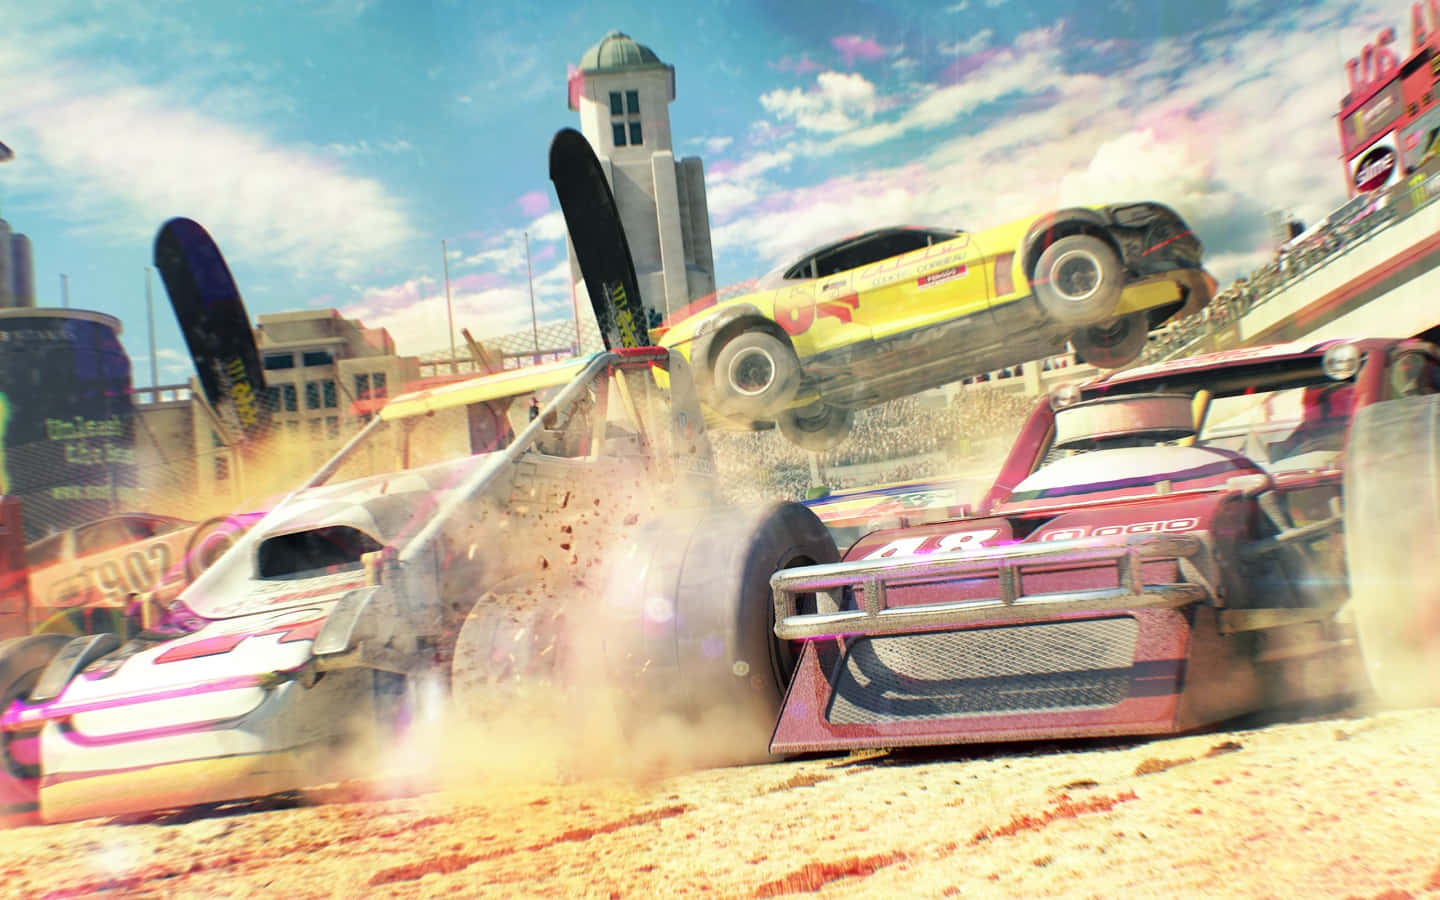 Get Ready To Race Through The Dirt in Dirt Showdown!